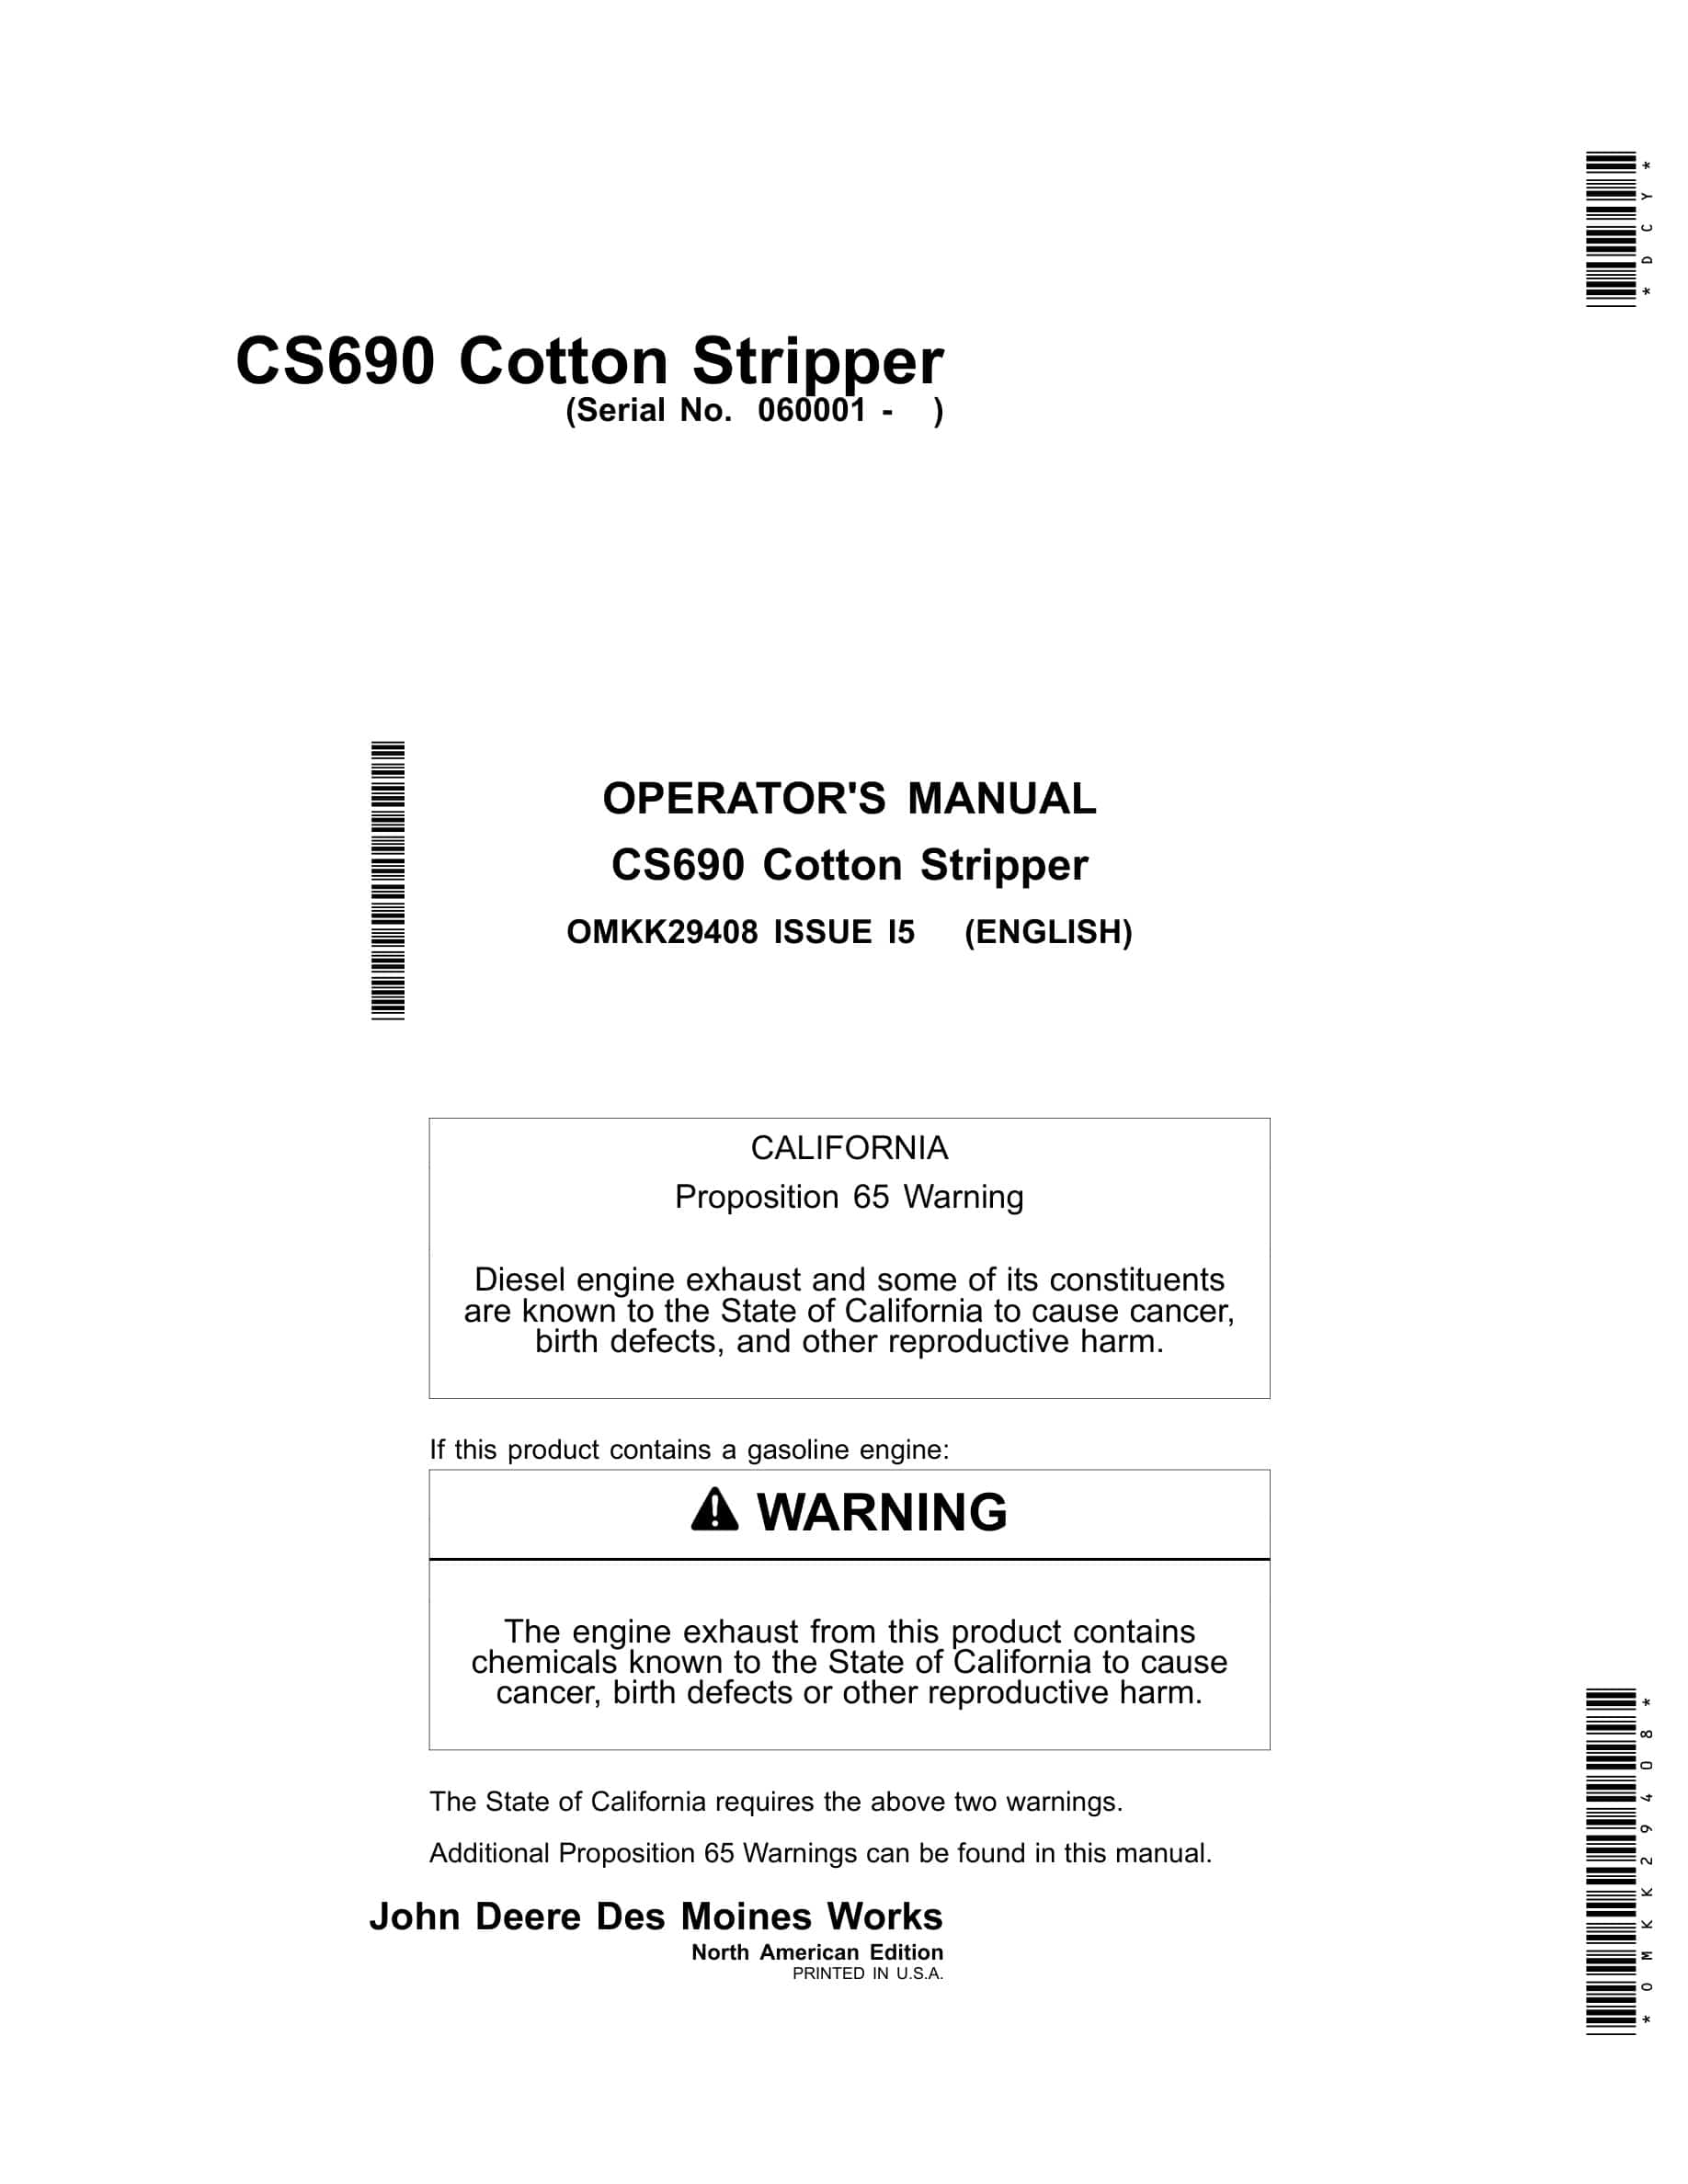 John Deere CS690 Cotton Stripper Operator Manual OMKK29408-1